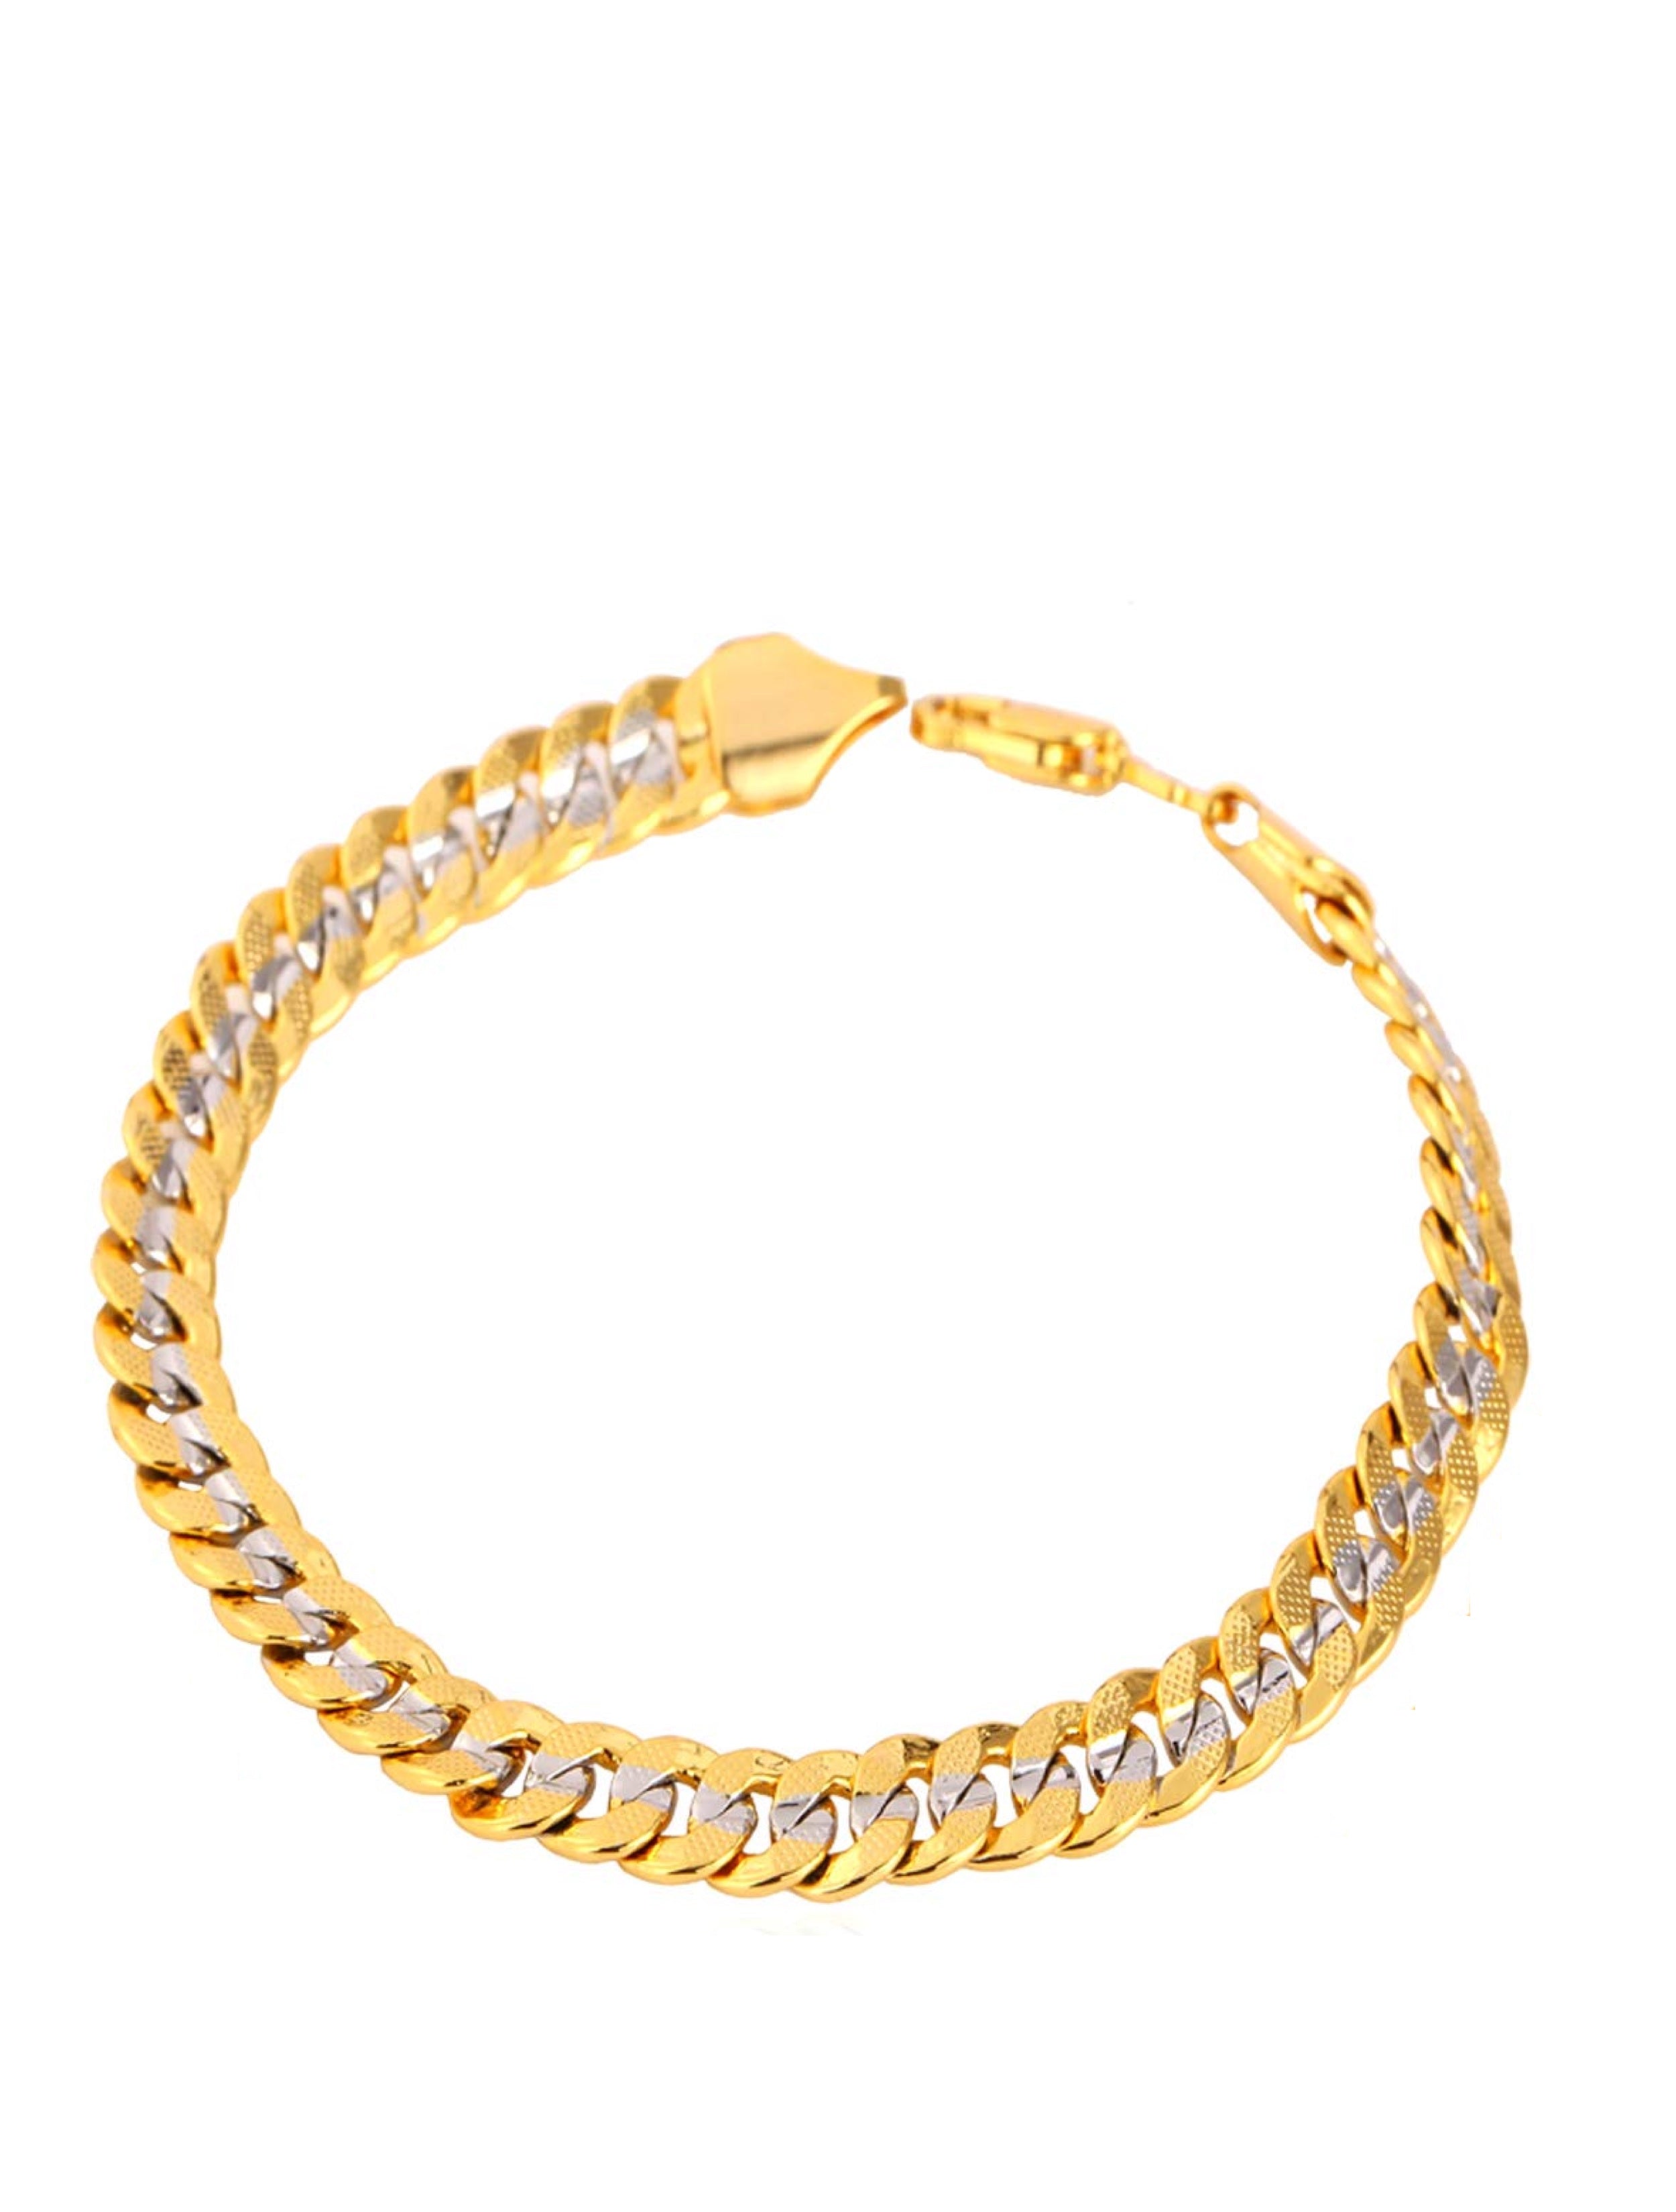 18k Gold & Silver Two Tone Chain Link Bracelet